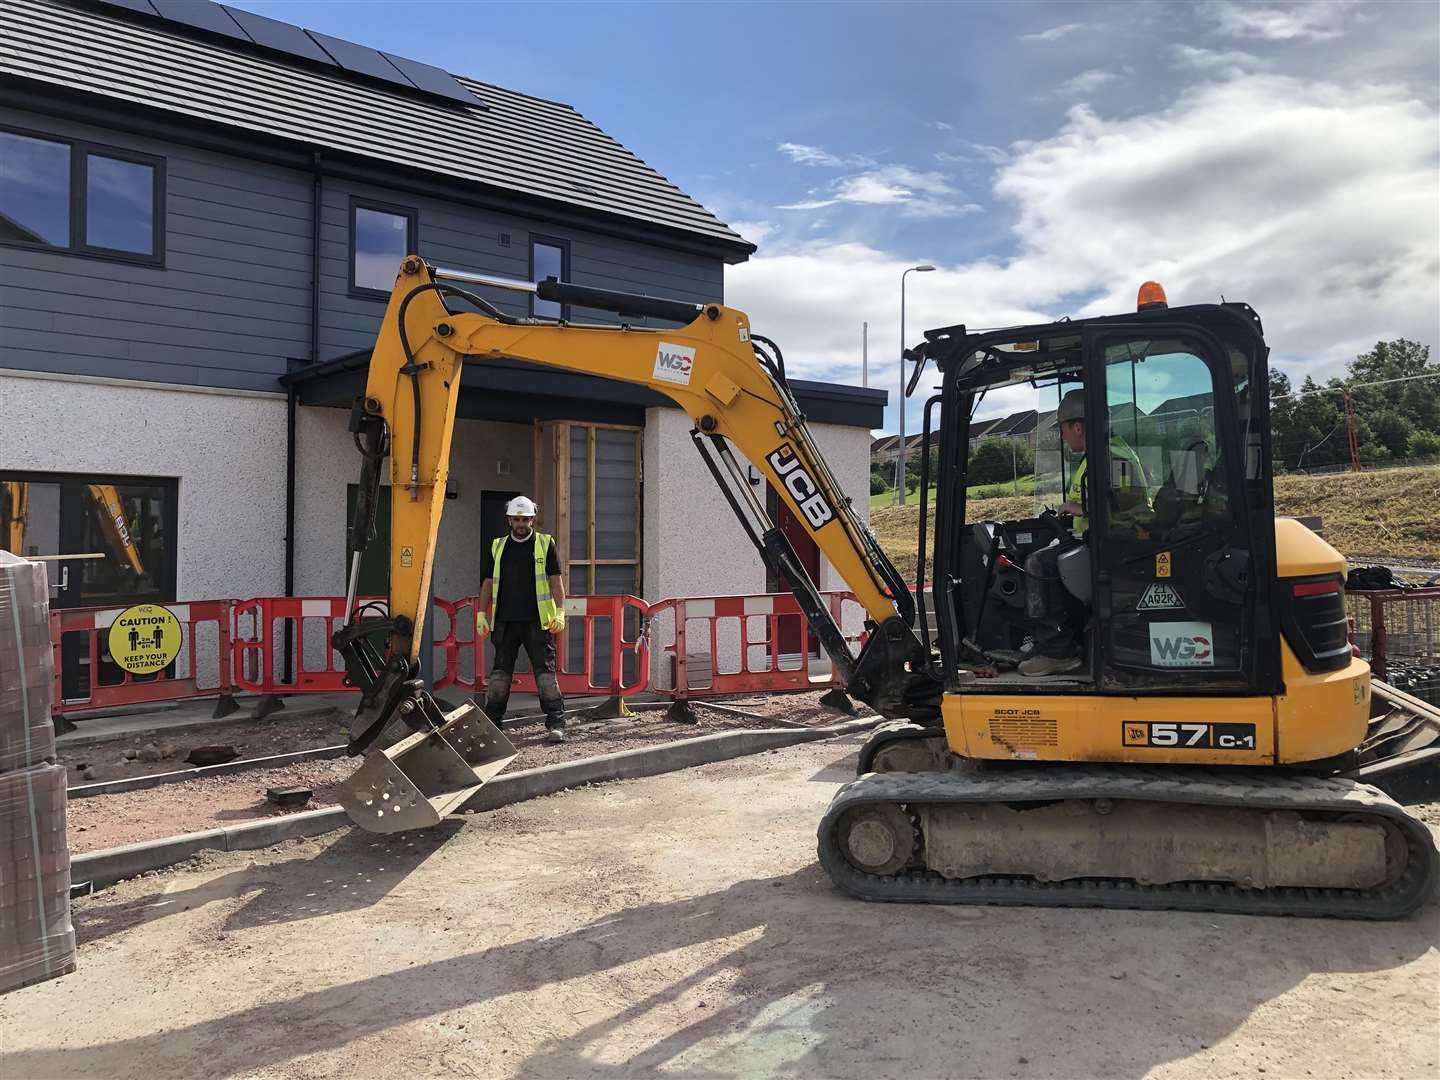 Work under way on building new homes at Slackbuie, Inverness.